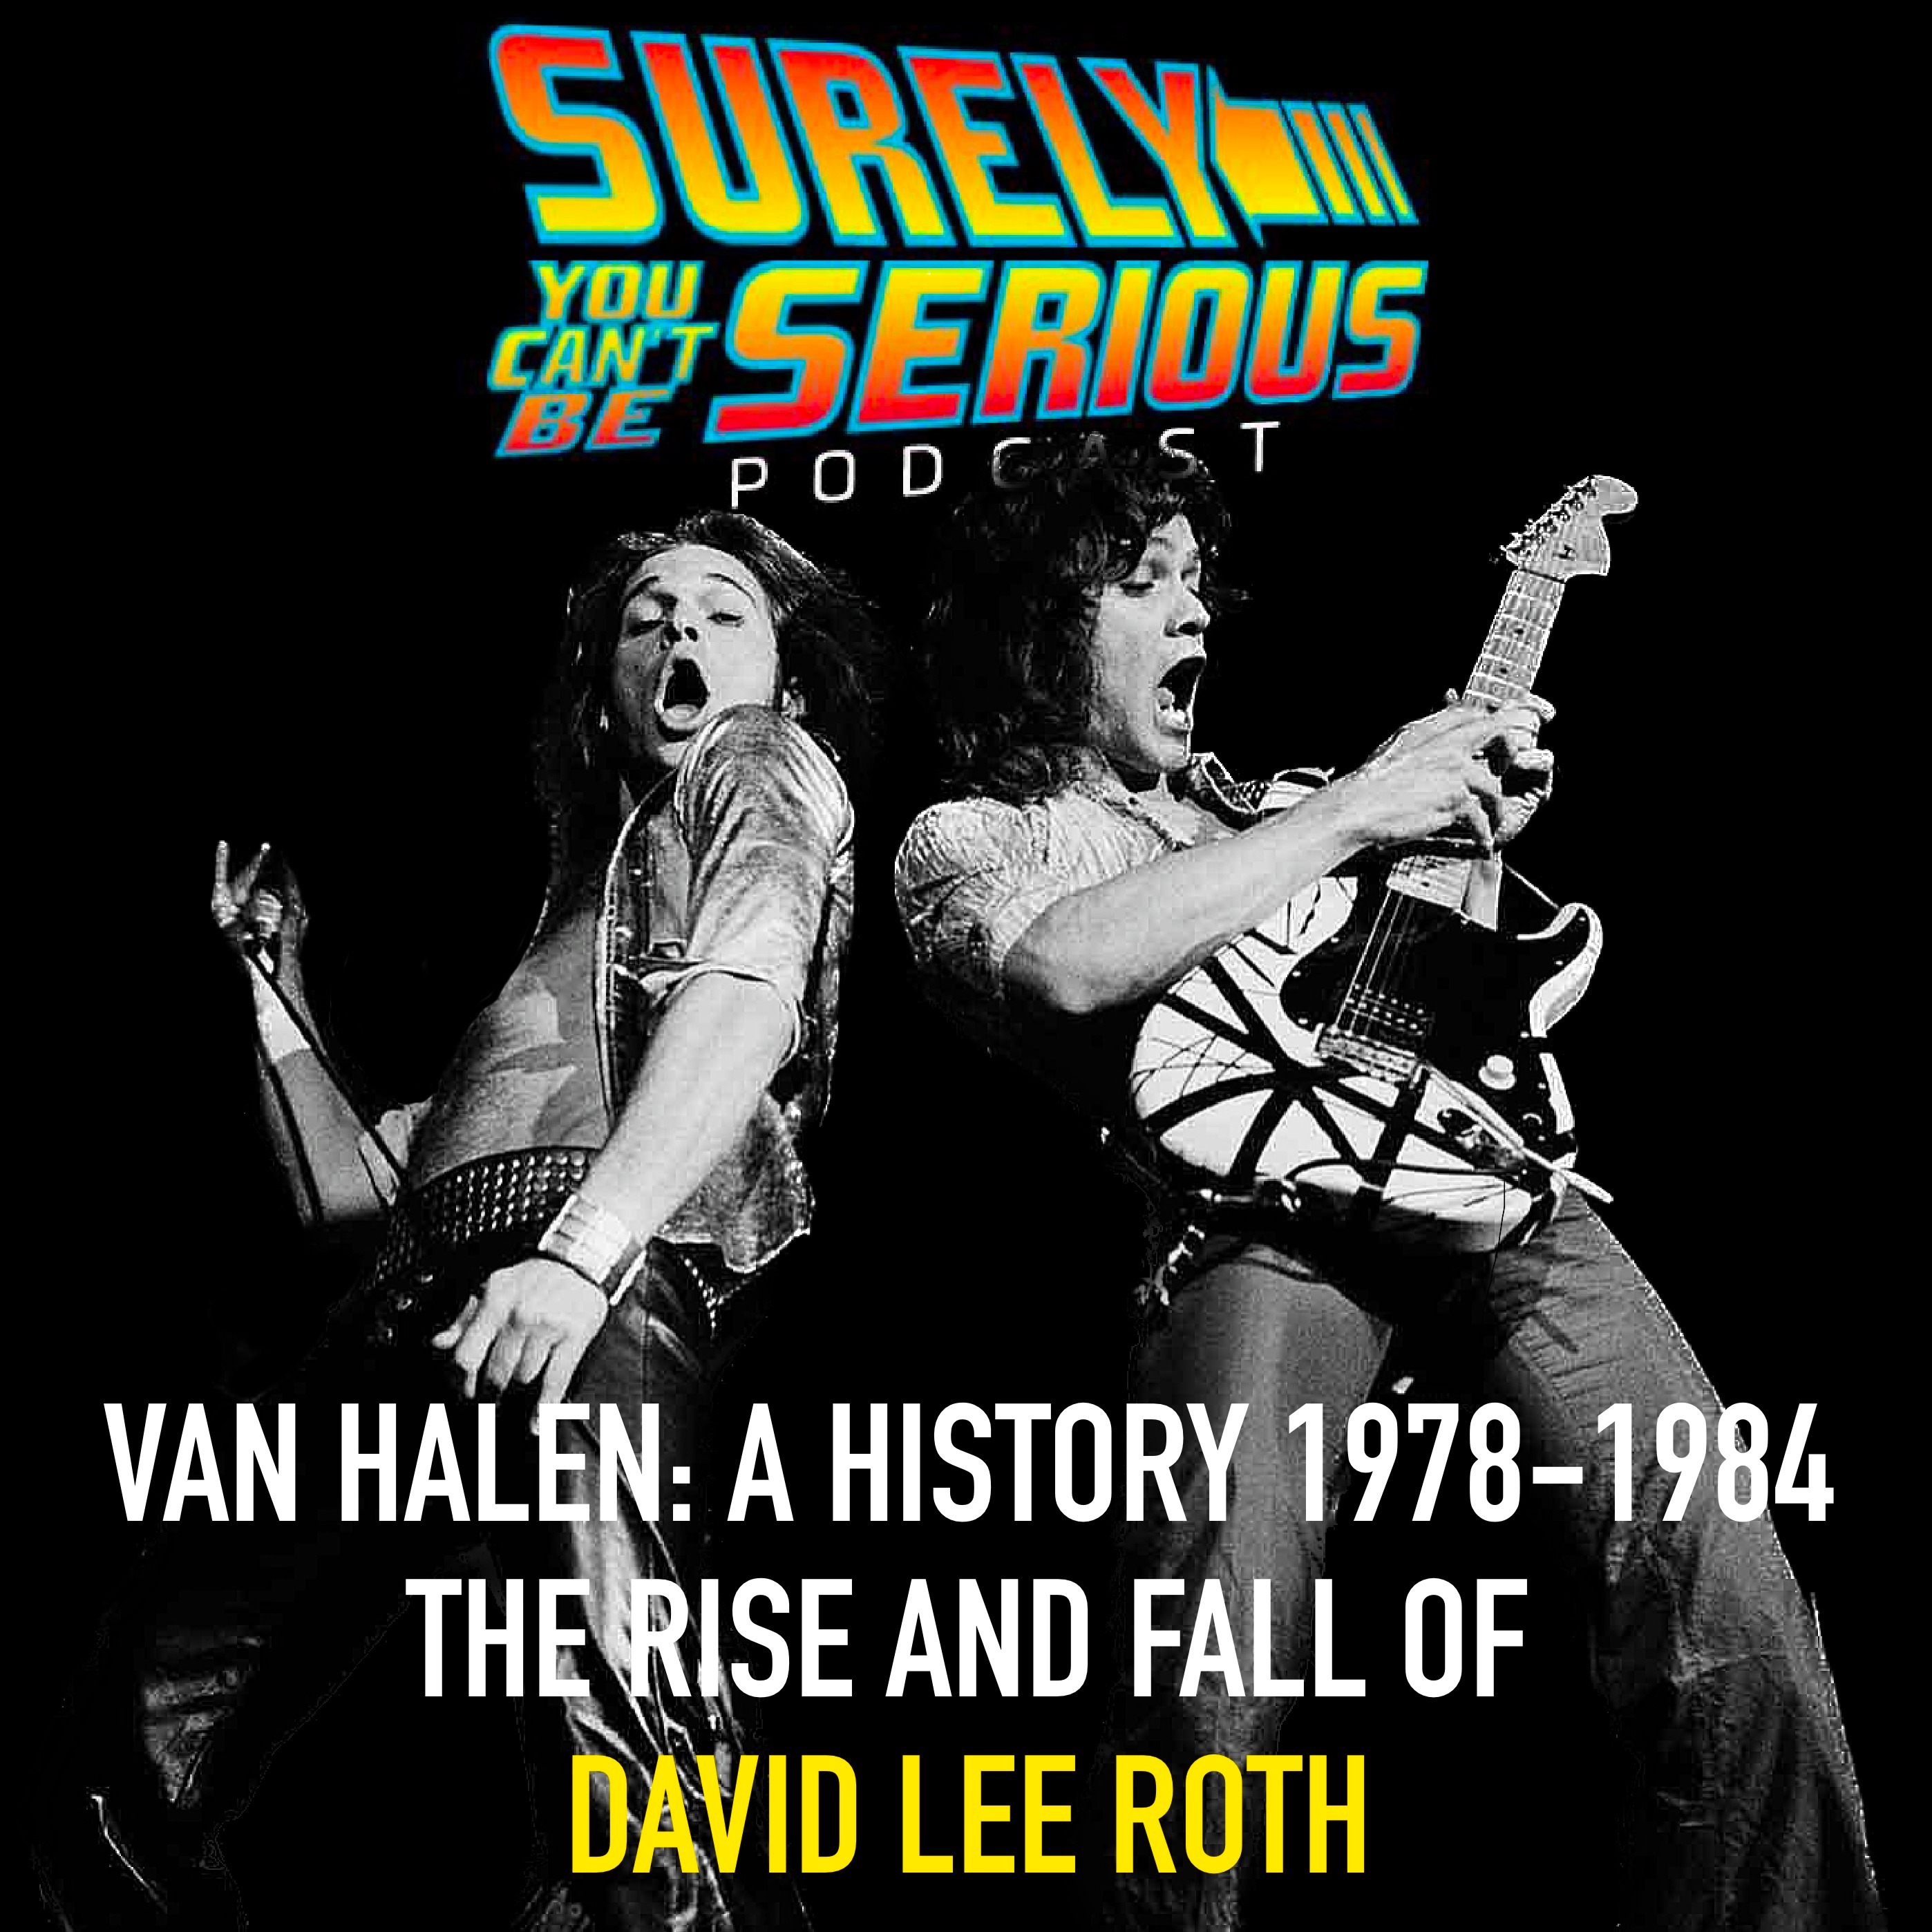 A History: Van Halen through Van Hagar - (Part 2 of 3) The Rise and Fall of David Lee Roth Image